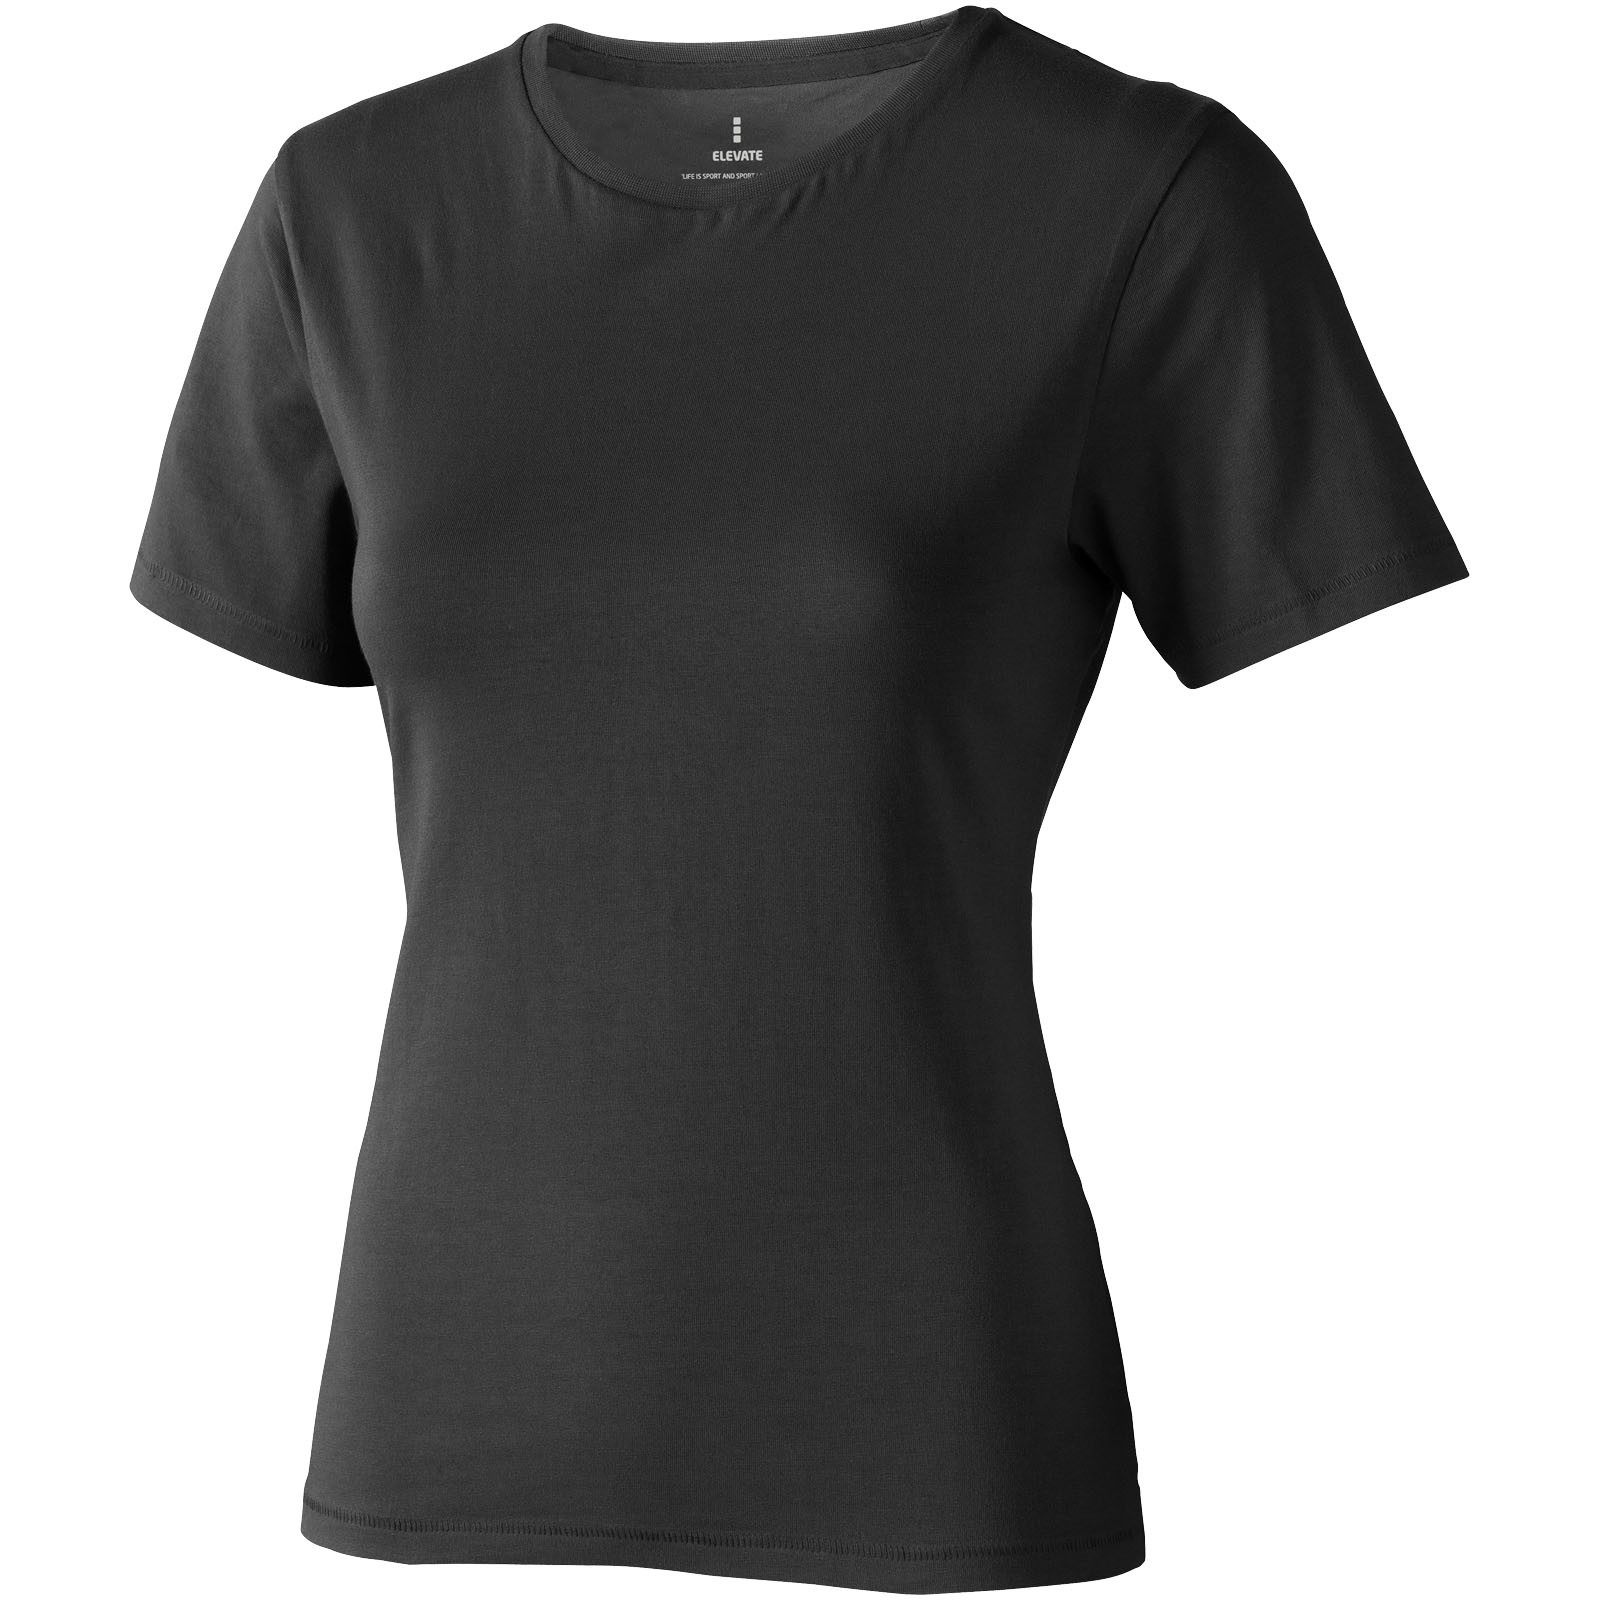 Nanaimo short sleeve women's T-shirt - Anthracite / XXL